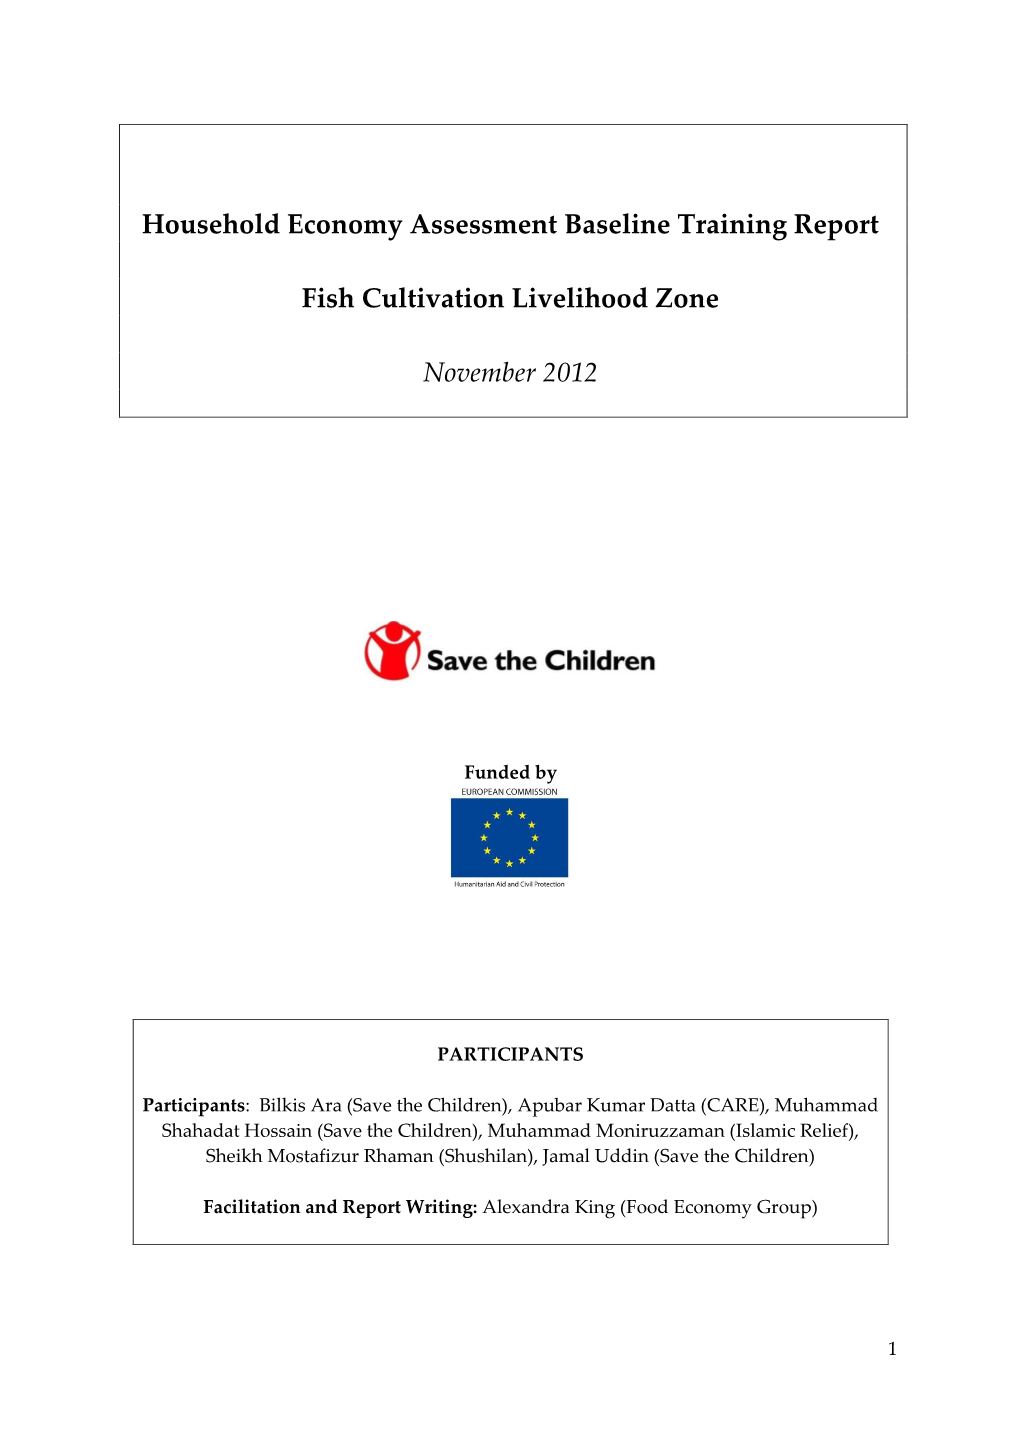 Fish Cultivation Zone HEA Baseline Report